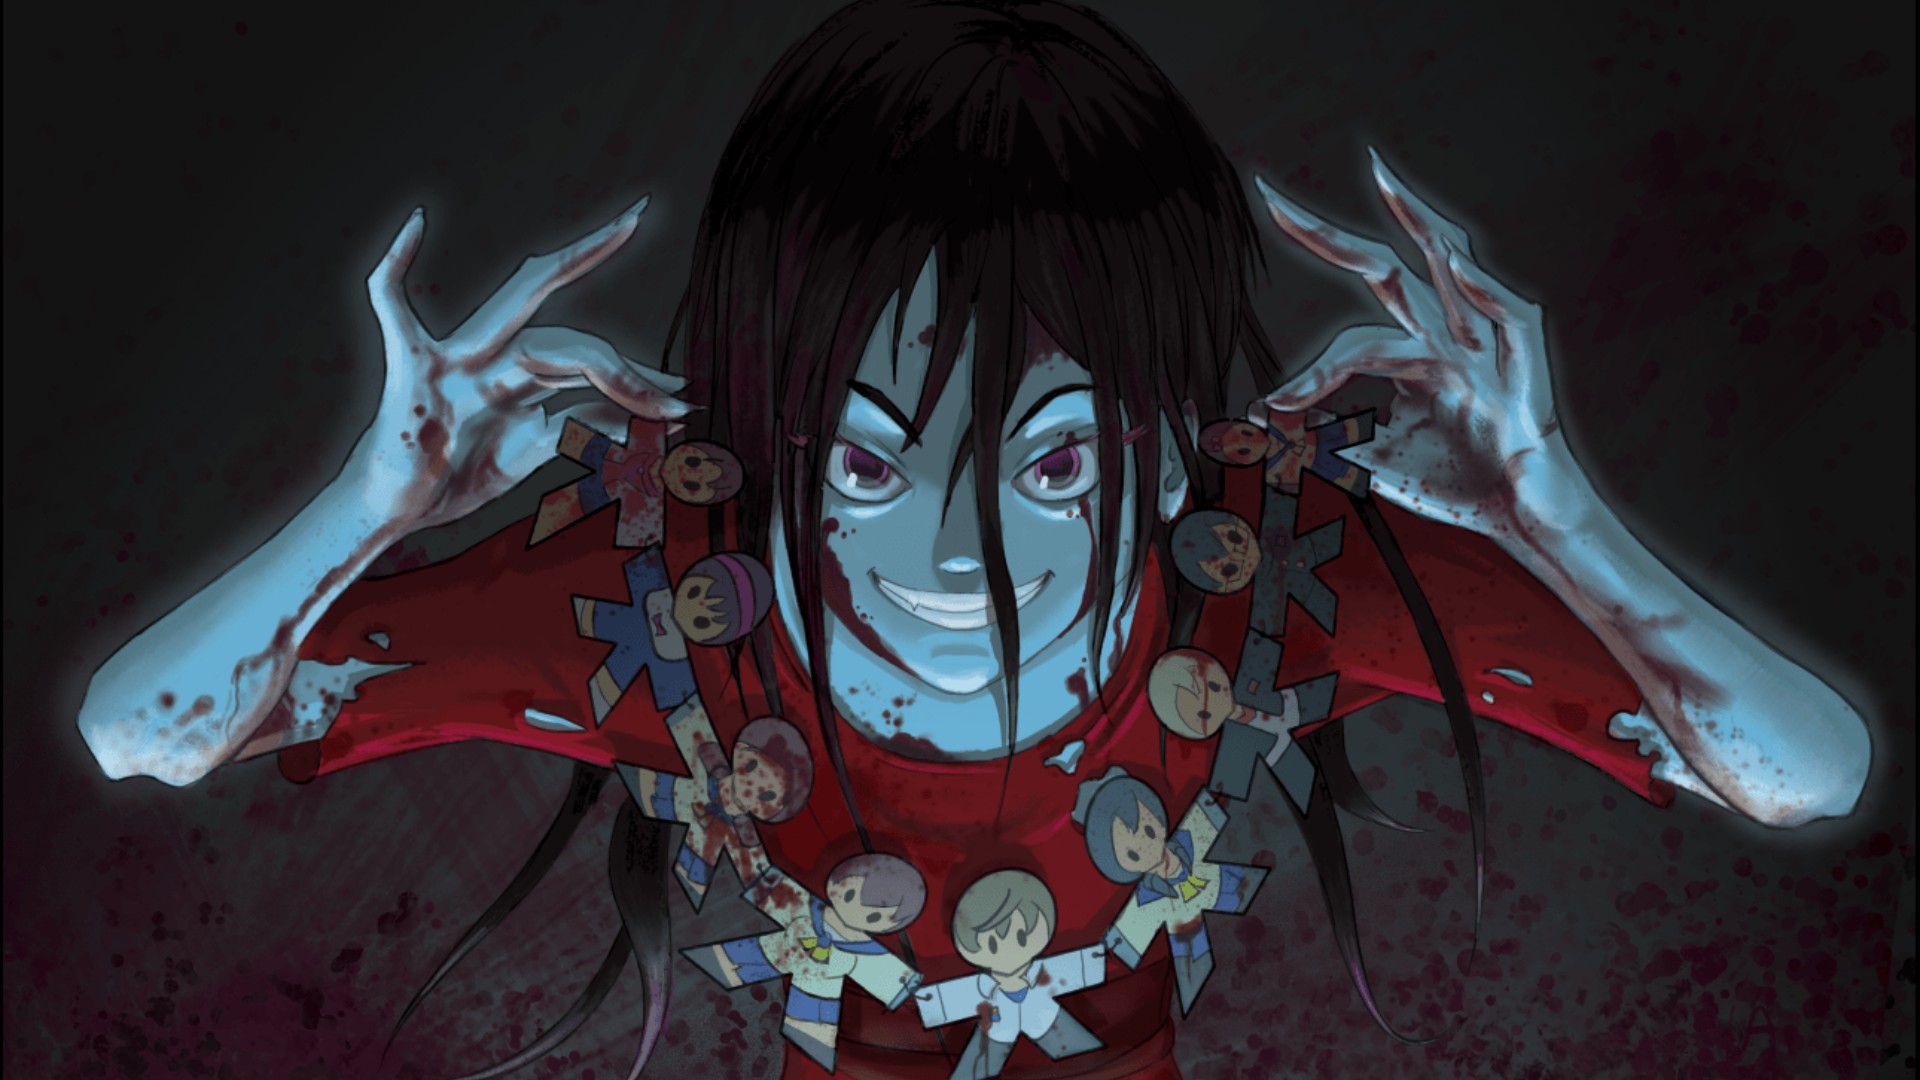 100+] Horror Anime Wallpapers